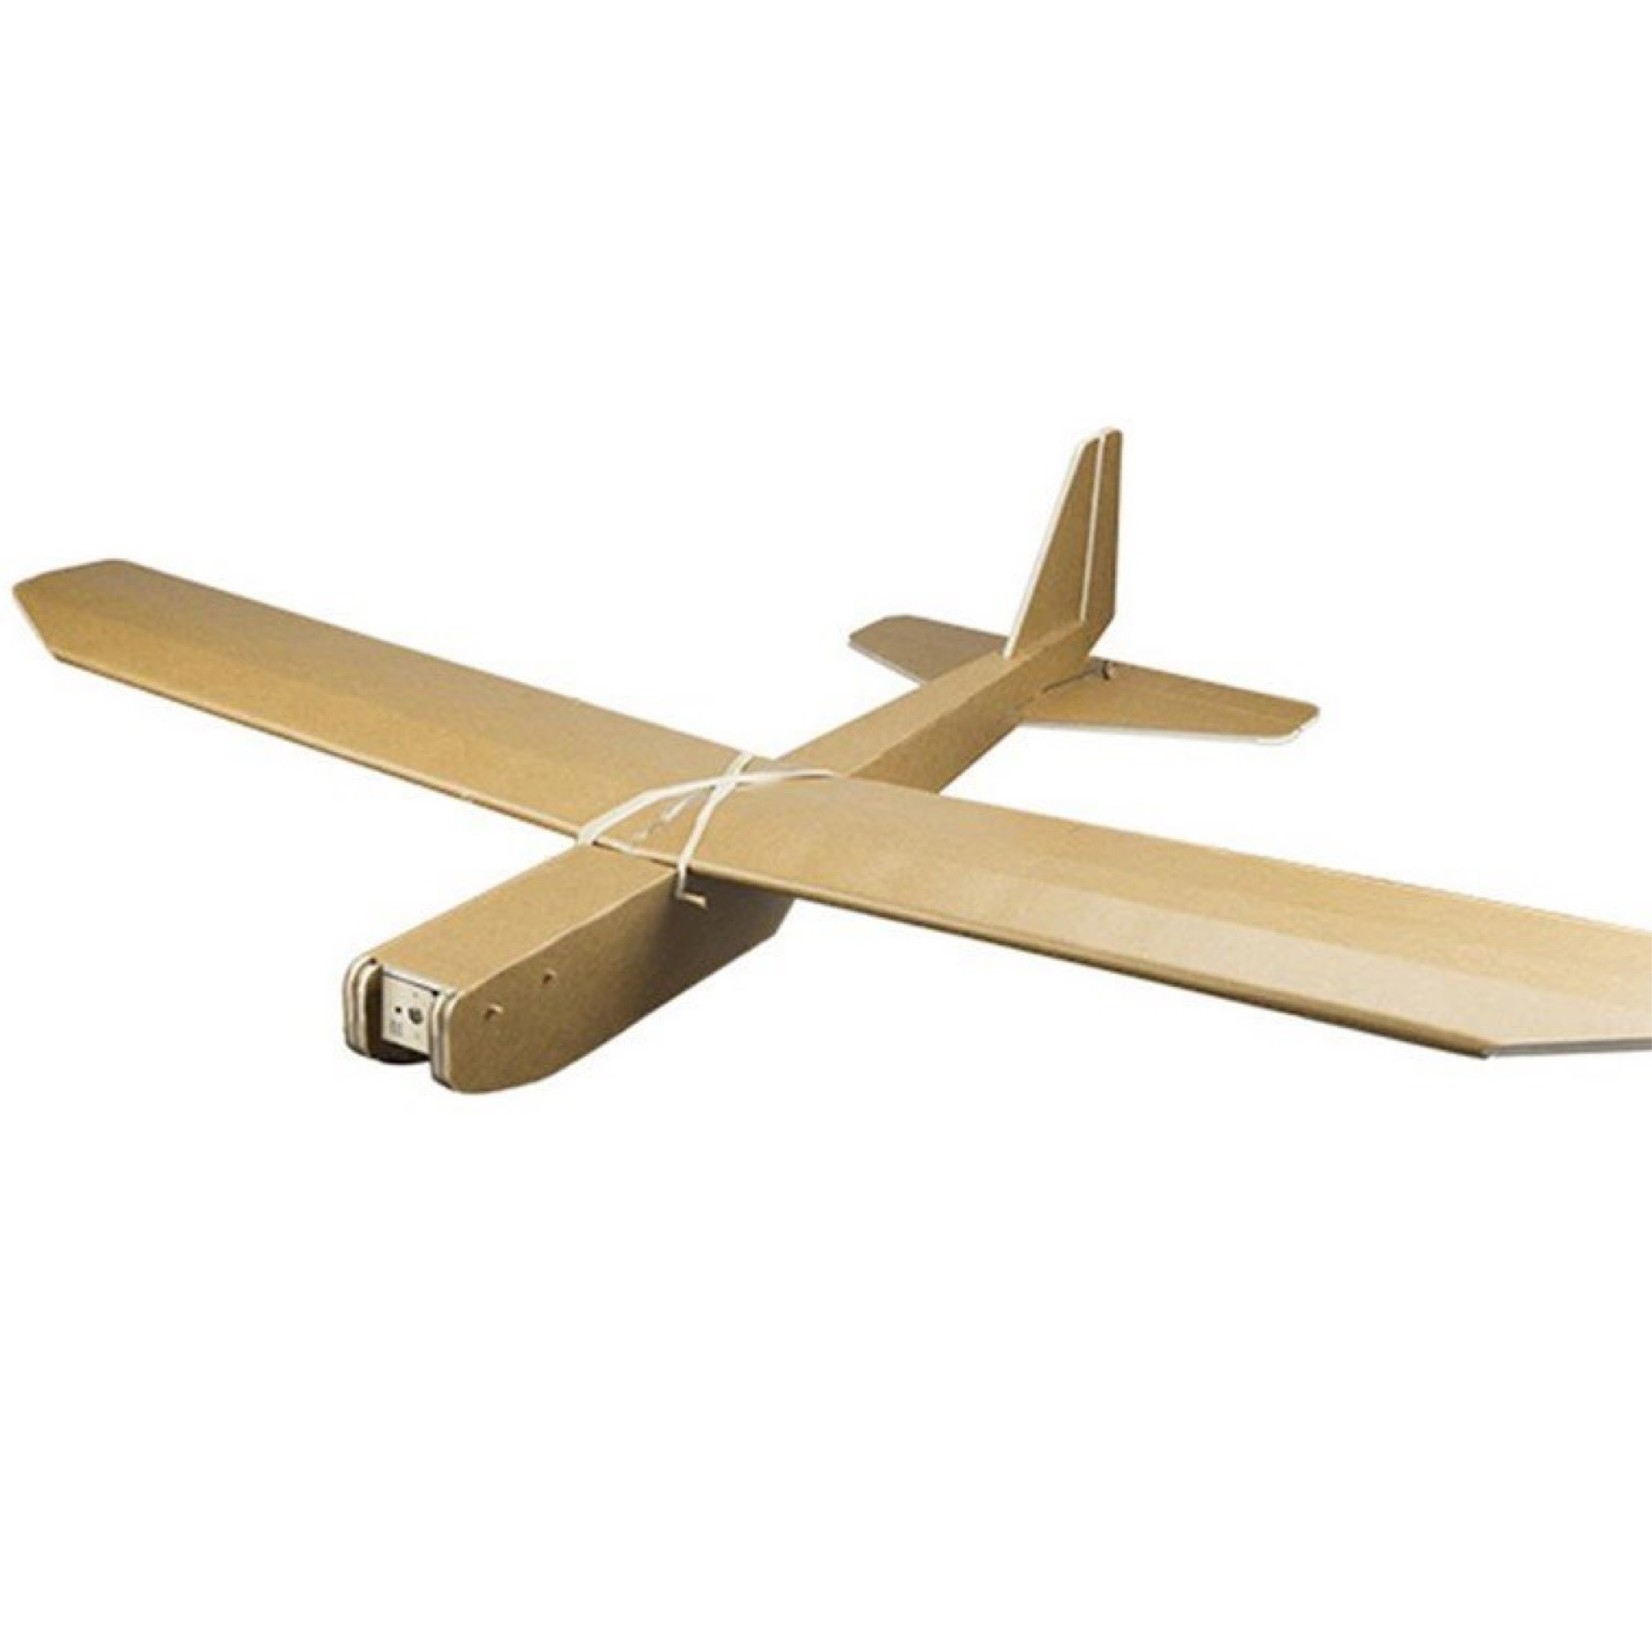 Flite Test Flite Test Mighty Mini Tiny Trainer Speed Build Electric Airplane Kit (940mm) #FLT-1023